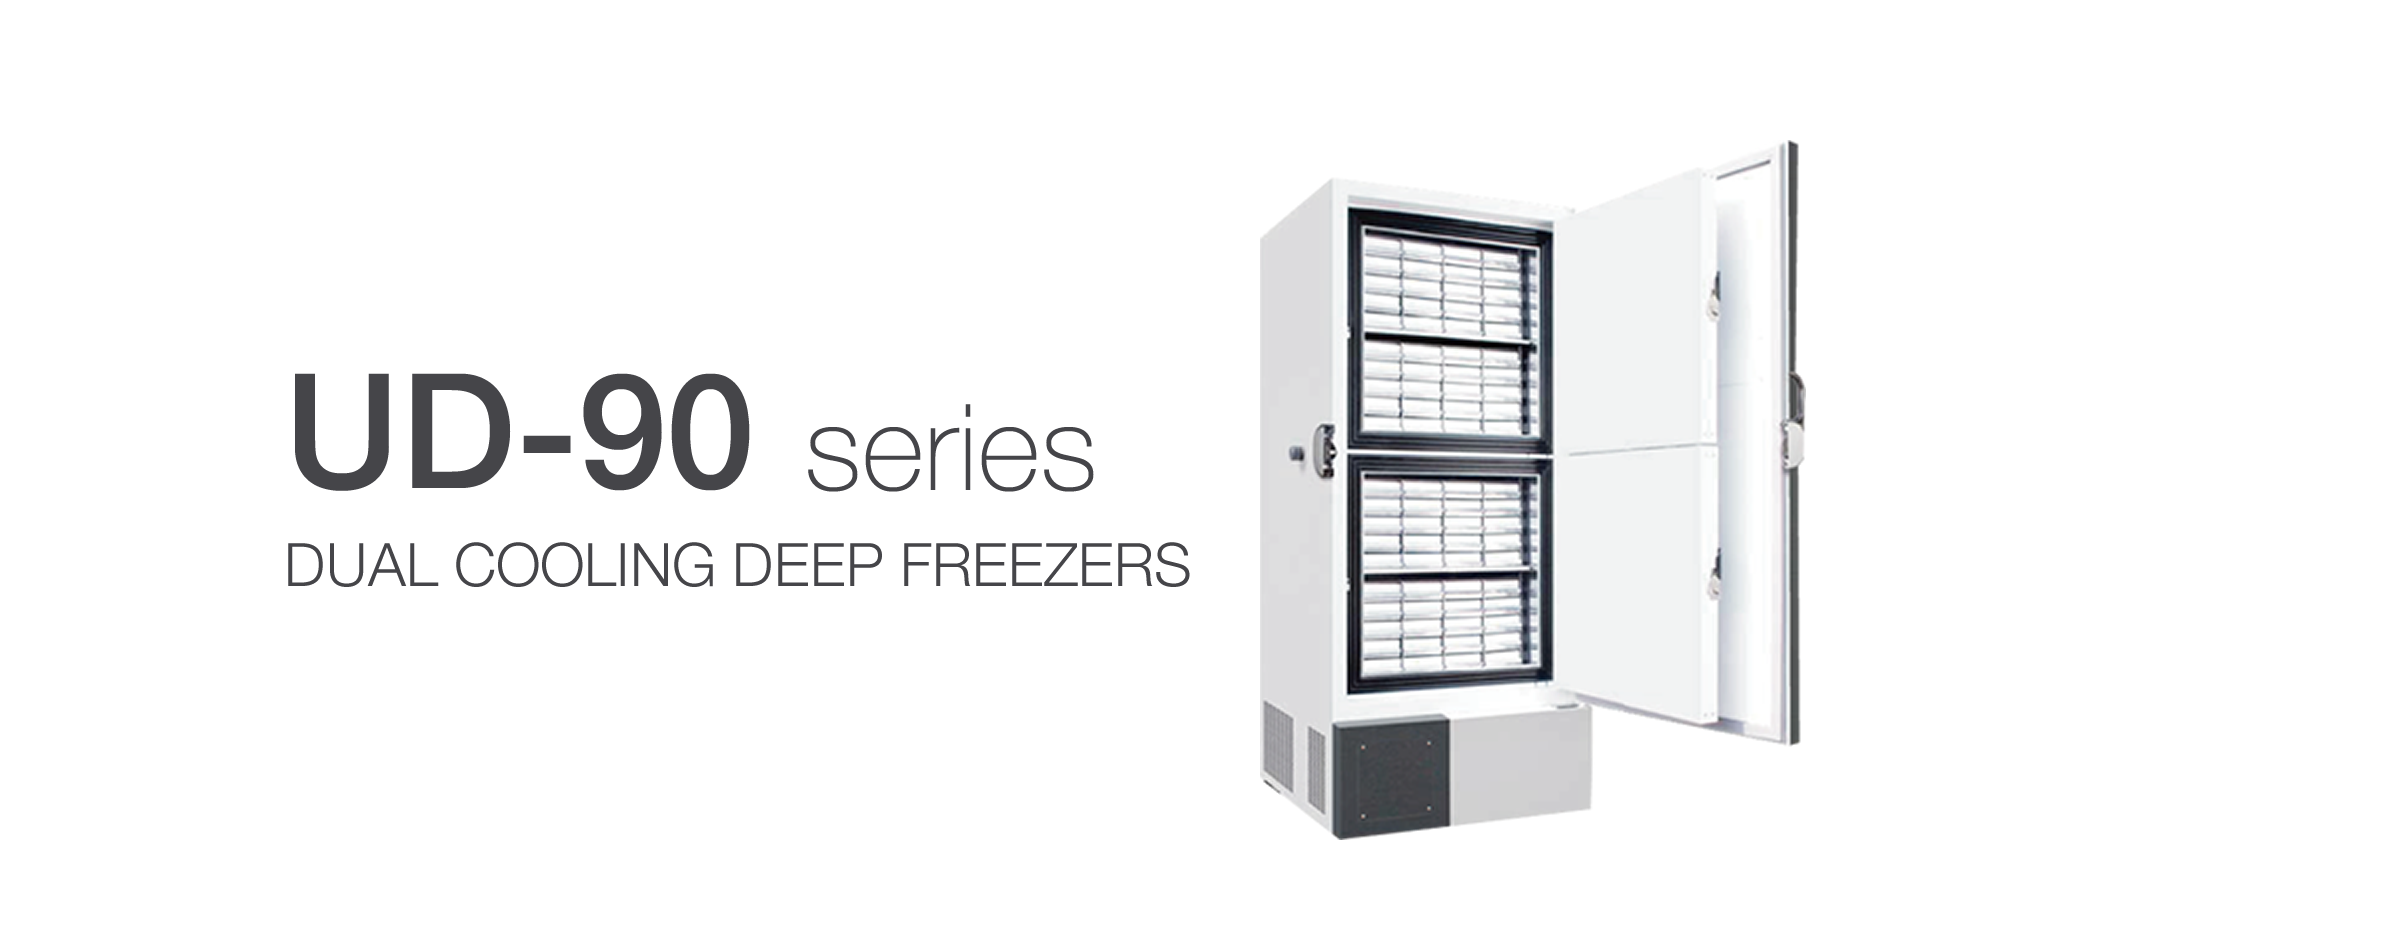 UD-90 series Dual Cooling Deep Freezers